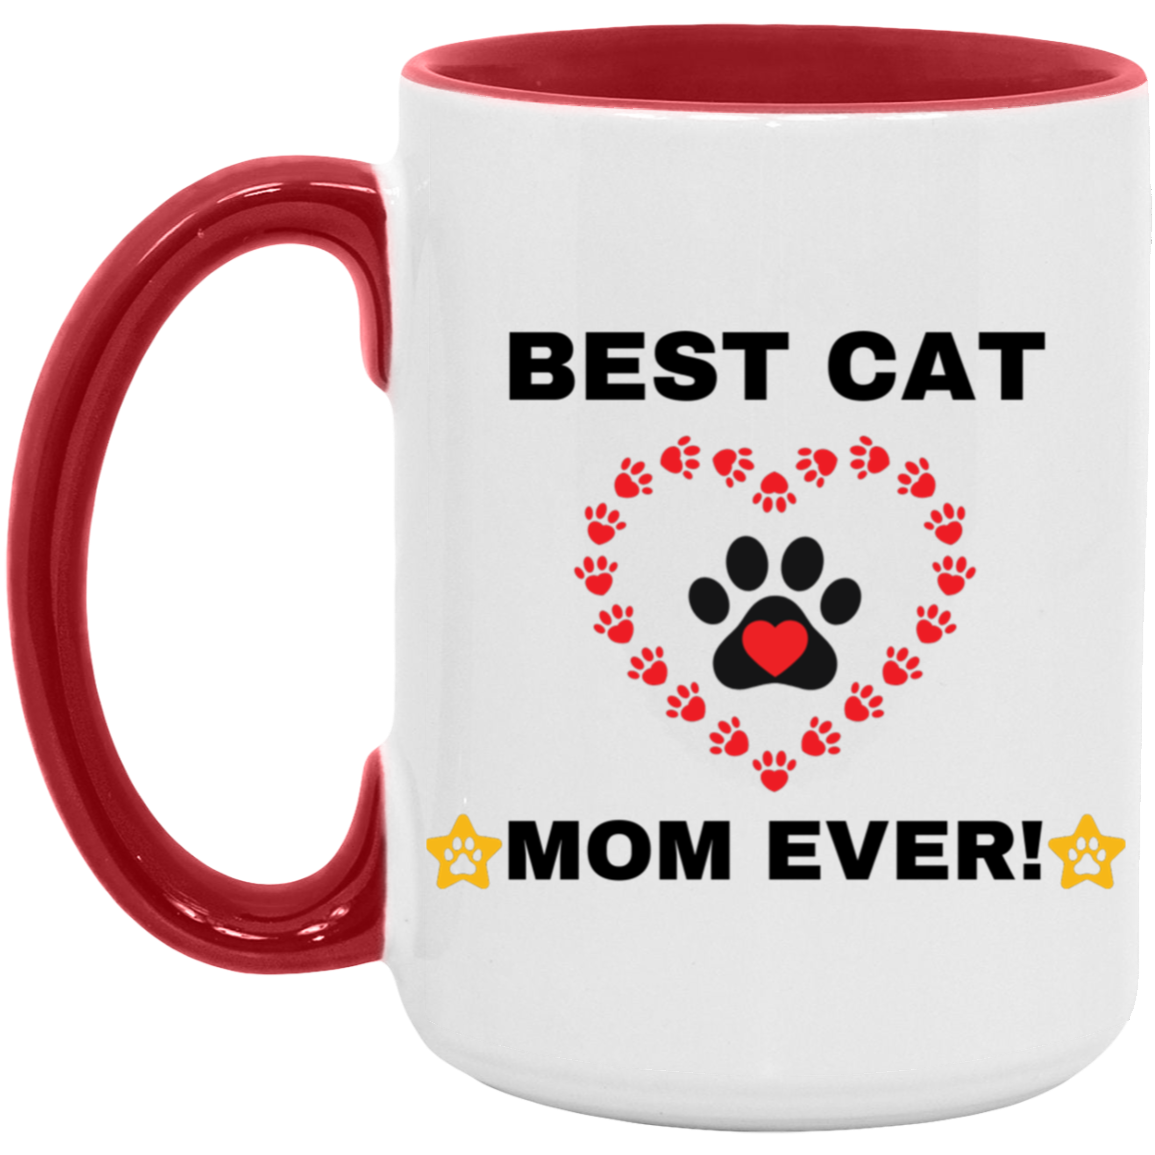 BEST CAT MOM EVER!  15oz. Accent Mug (MORE COLORS)